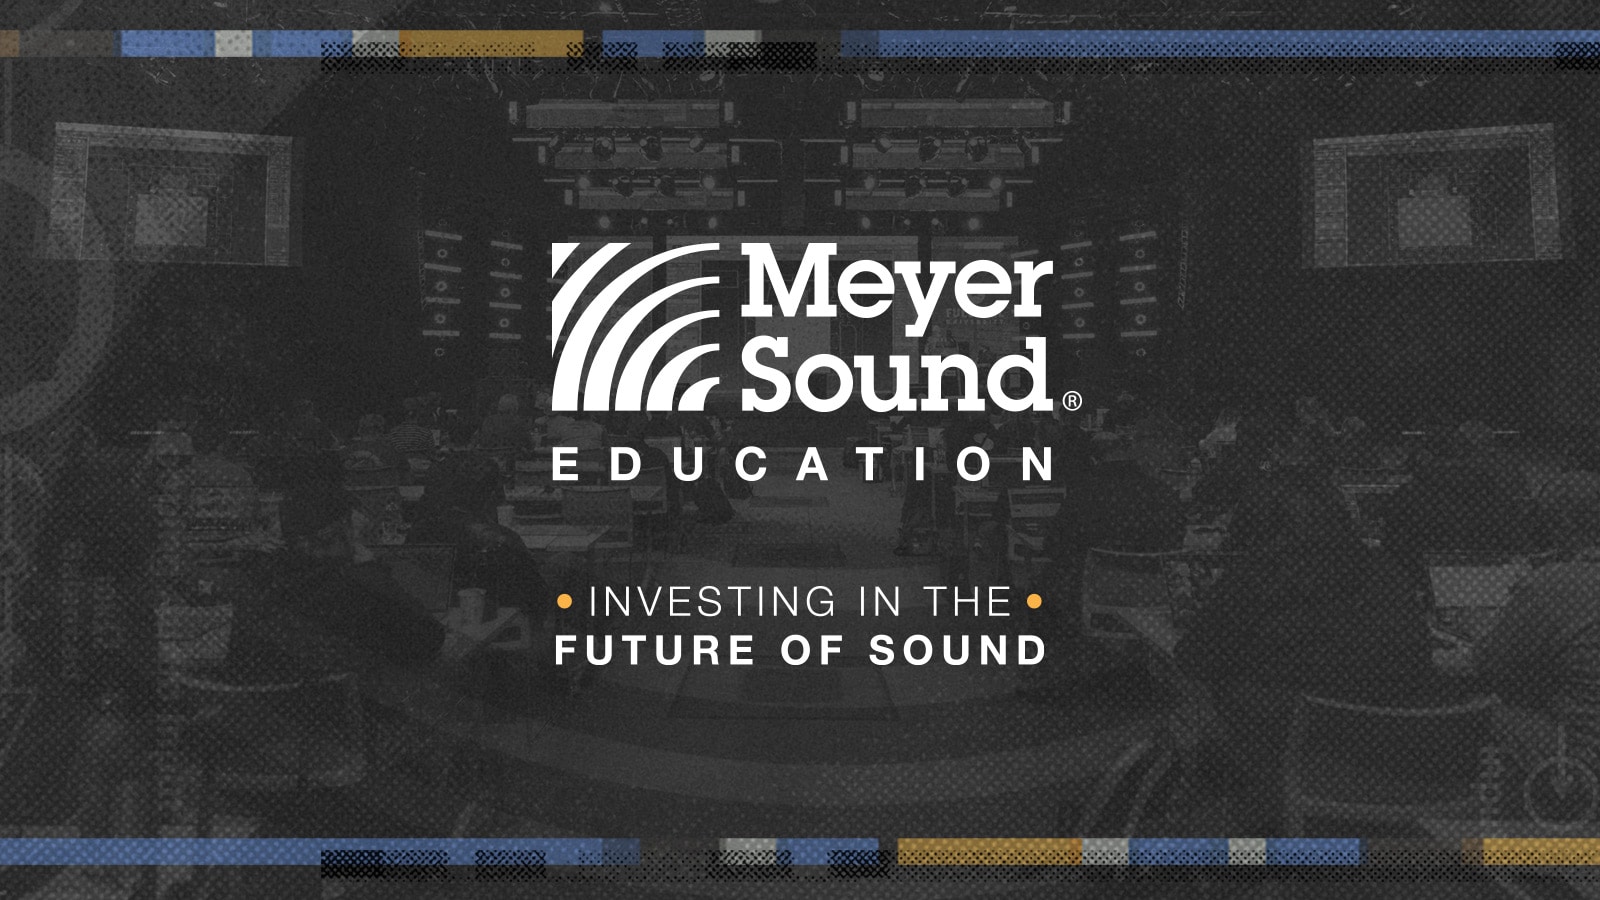 Meyer Sound Elevates Education Program with Future-Focused Initiatives